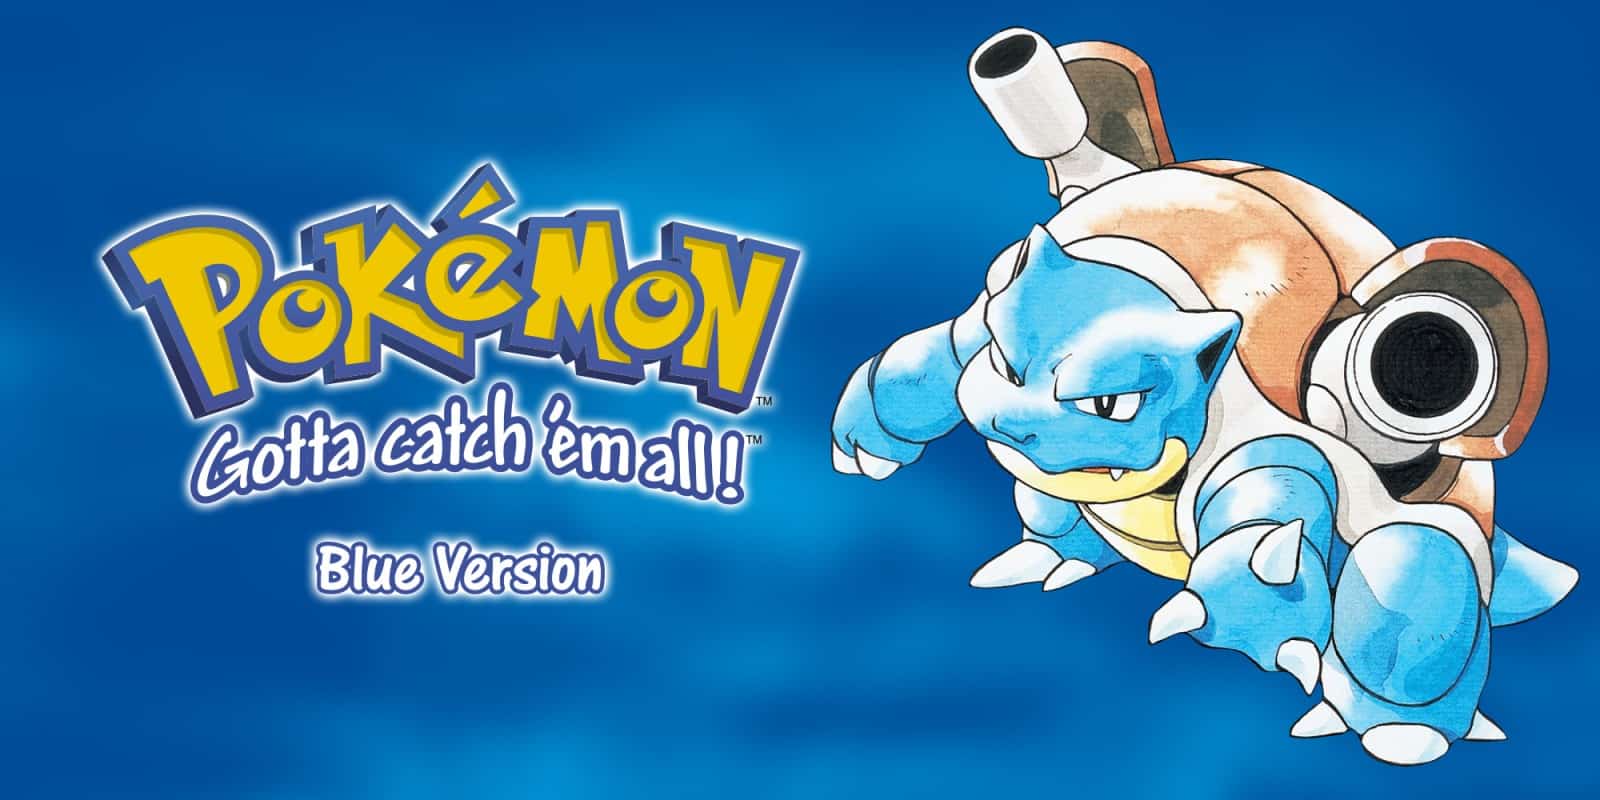 The slogan for the Pokémon franchise.